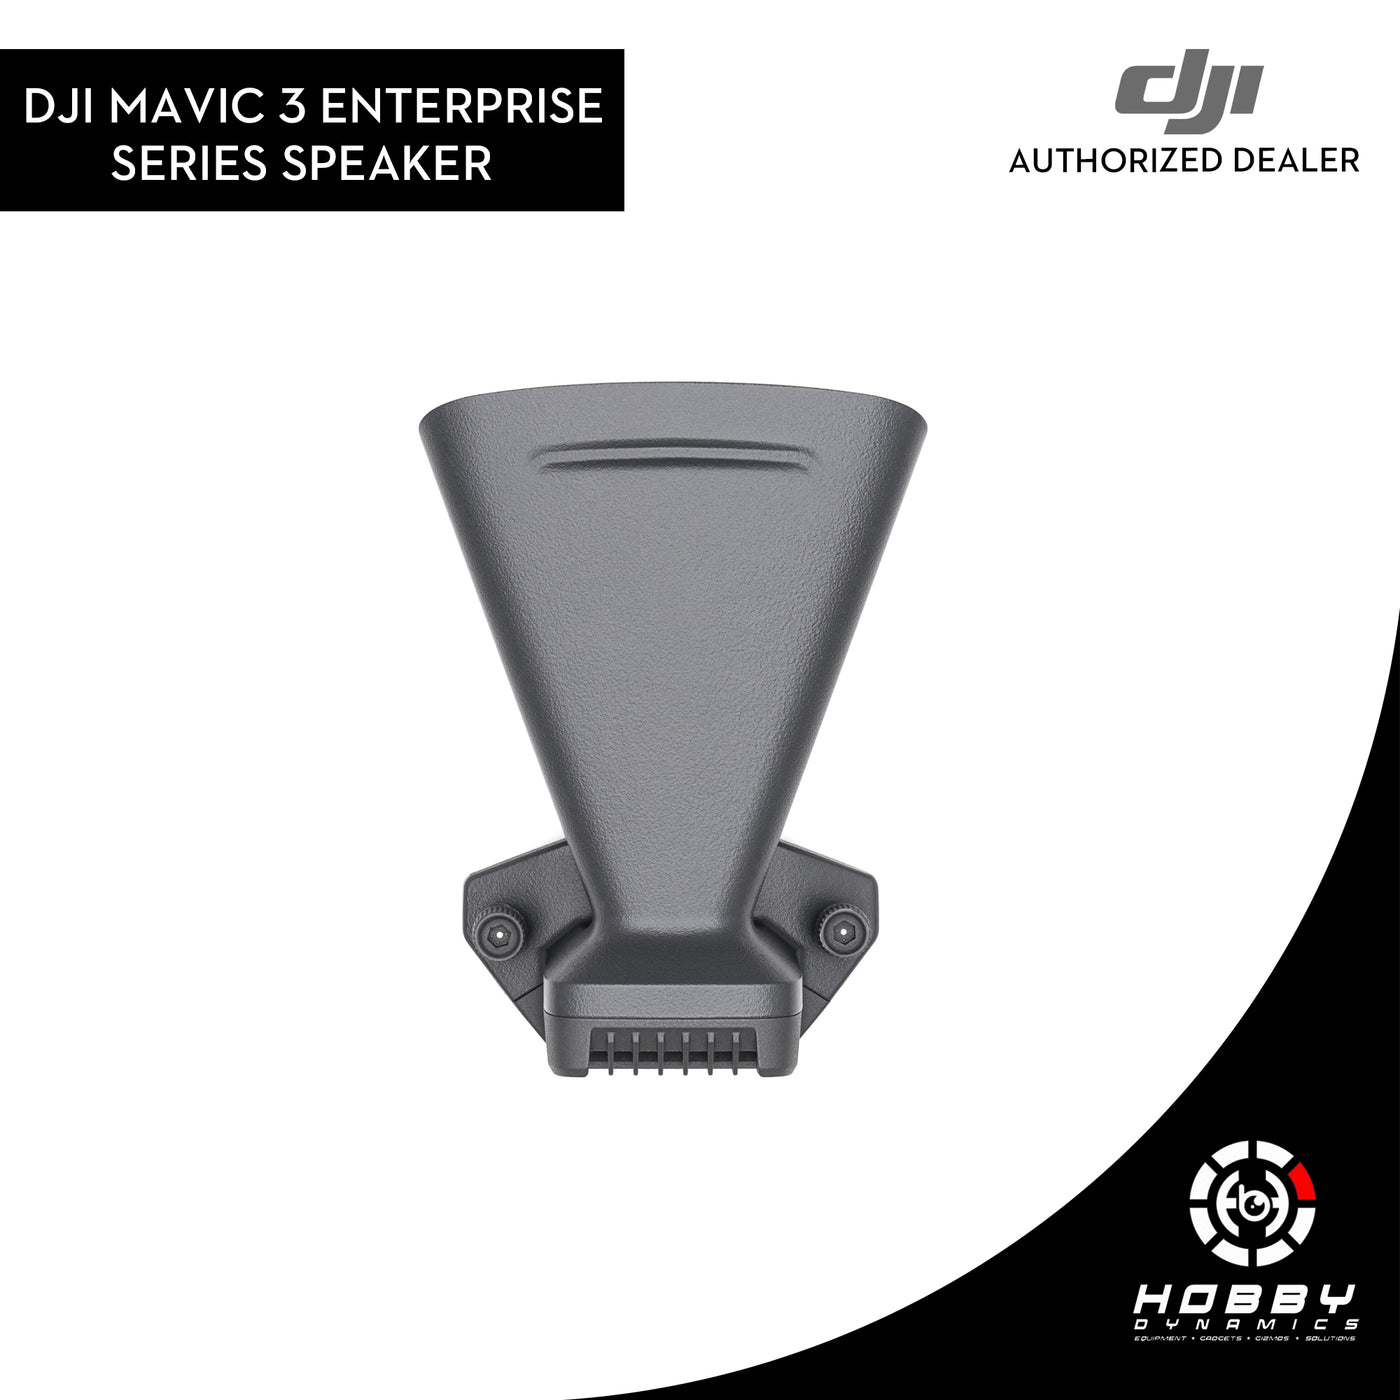 DJI Mavic 3 Enterprise Series Speaker